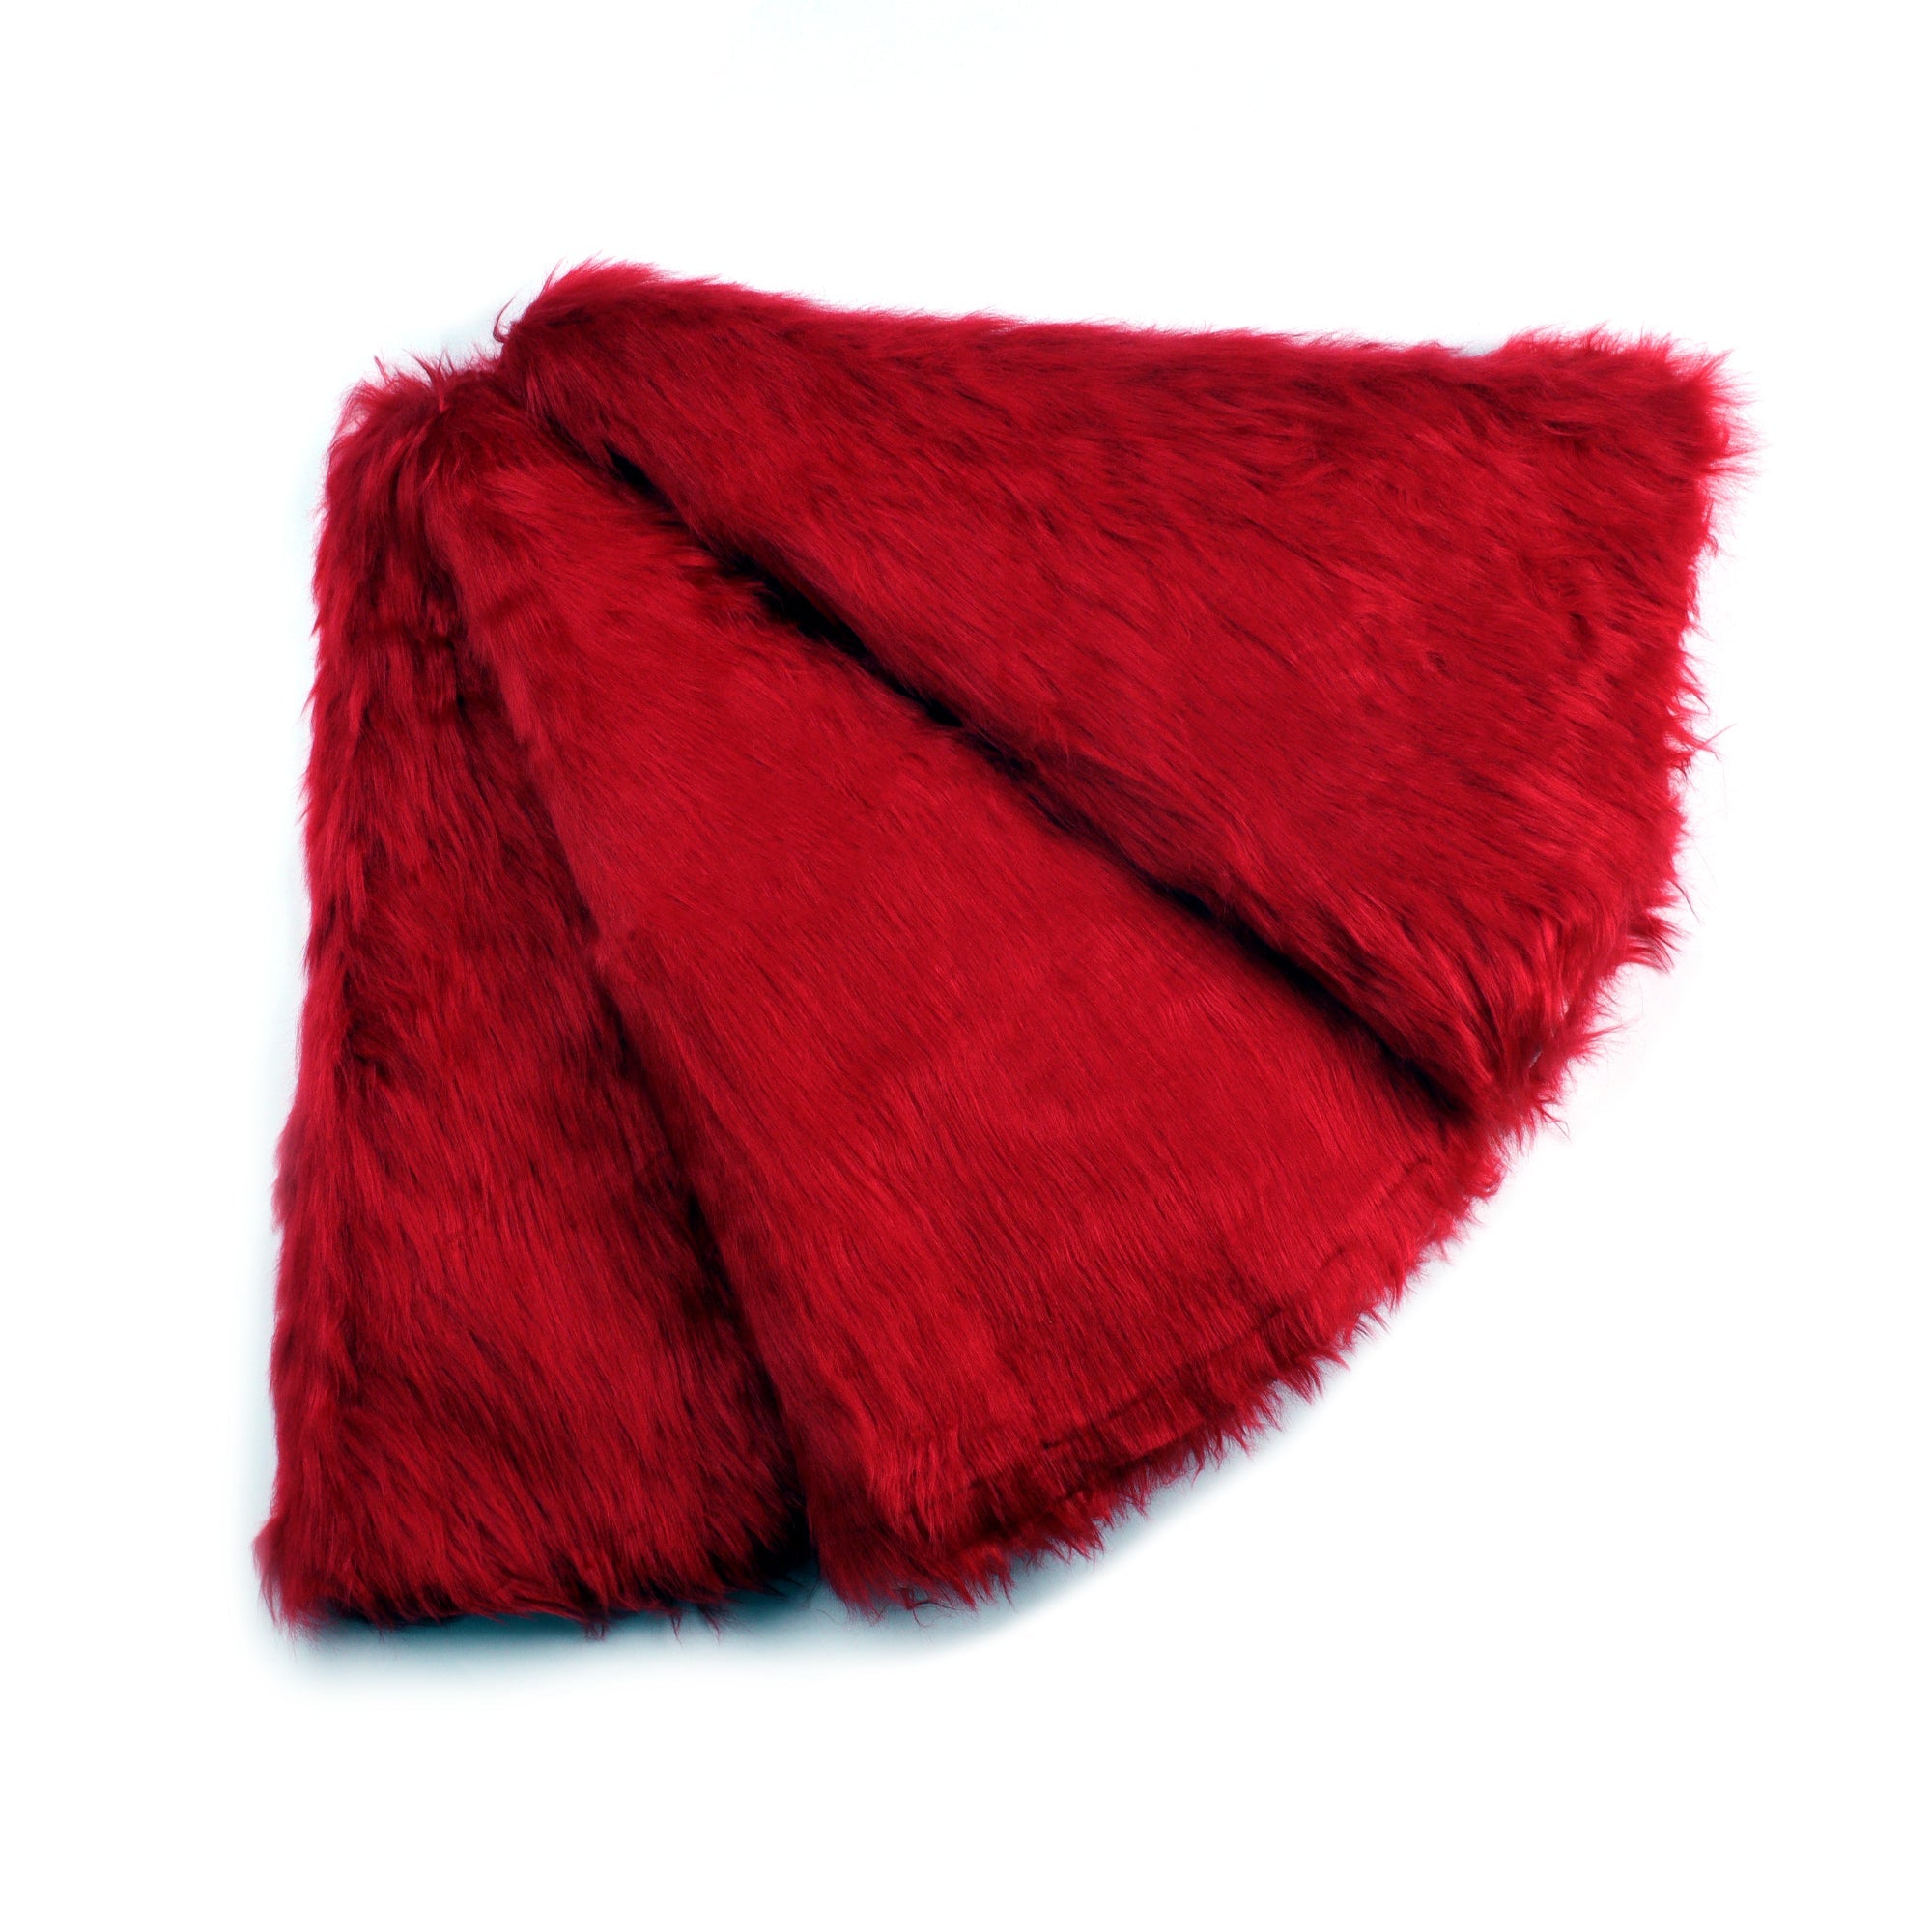 120cm Faux Fur Christmas Tree Skirt Red 120002 - MODA FLORA Santa's Workshop